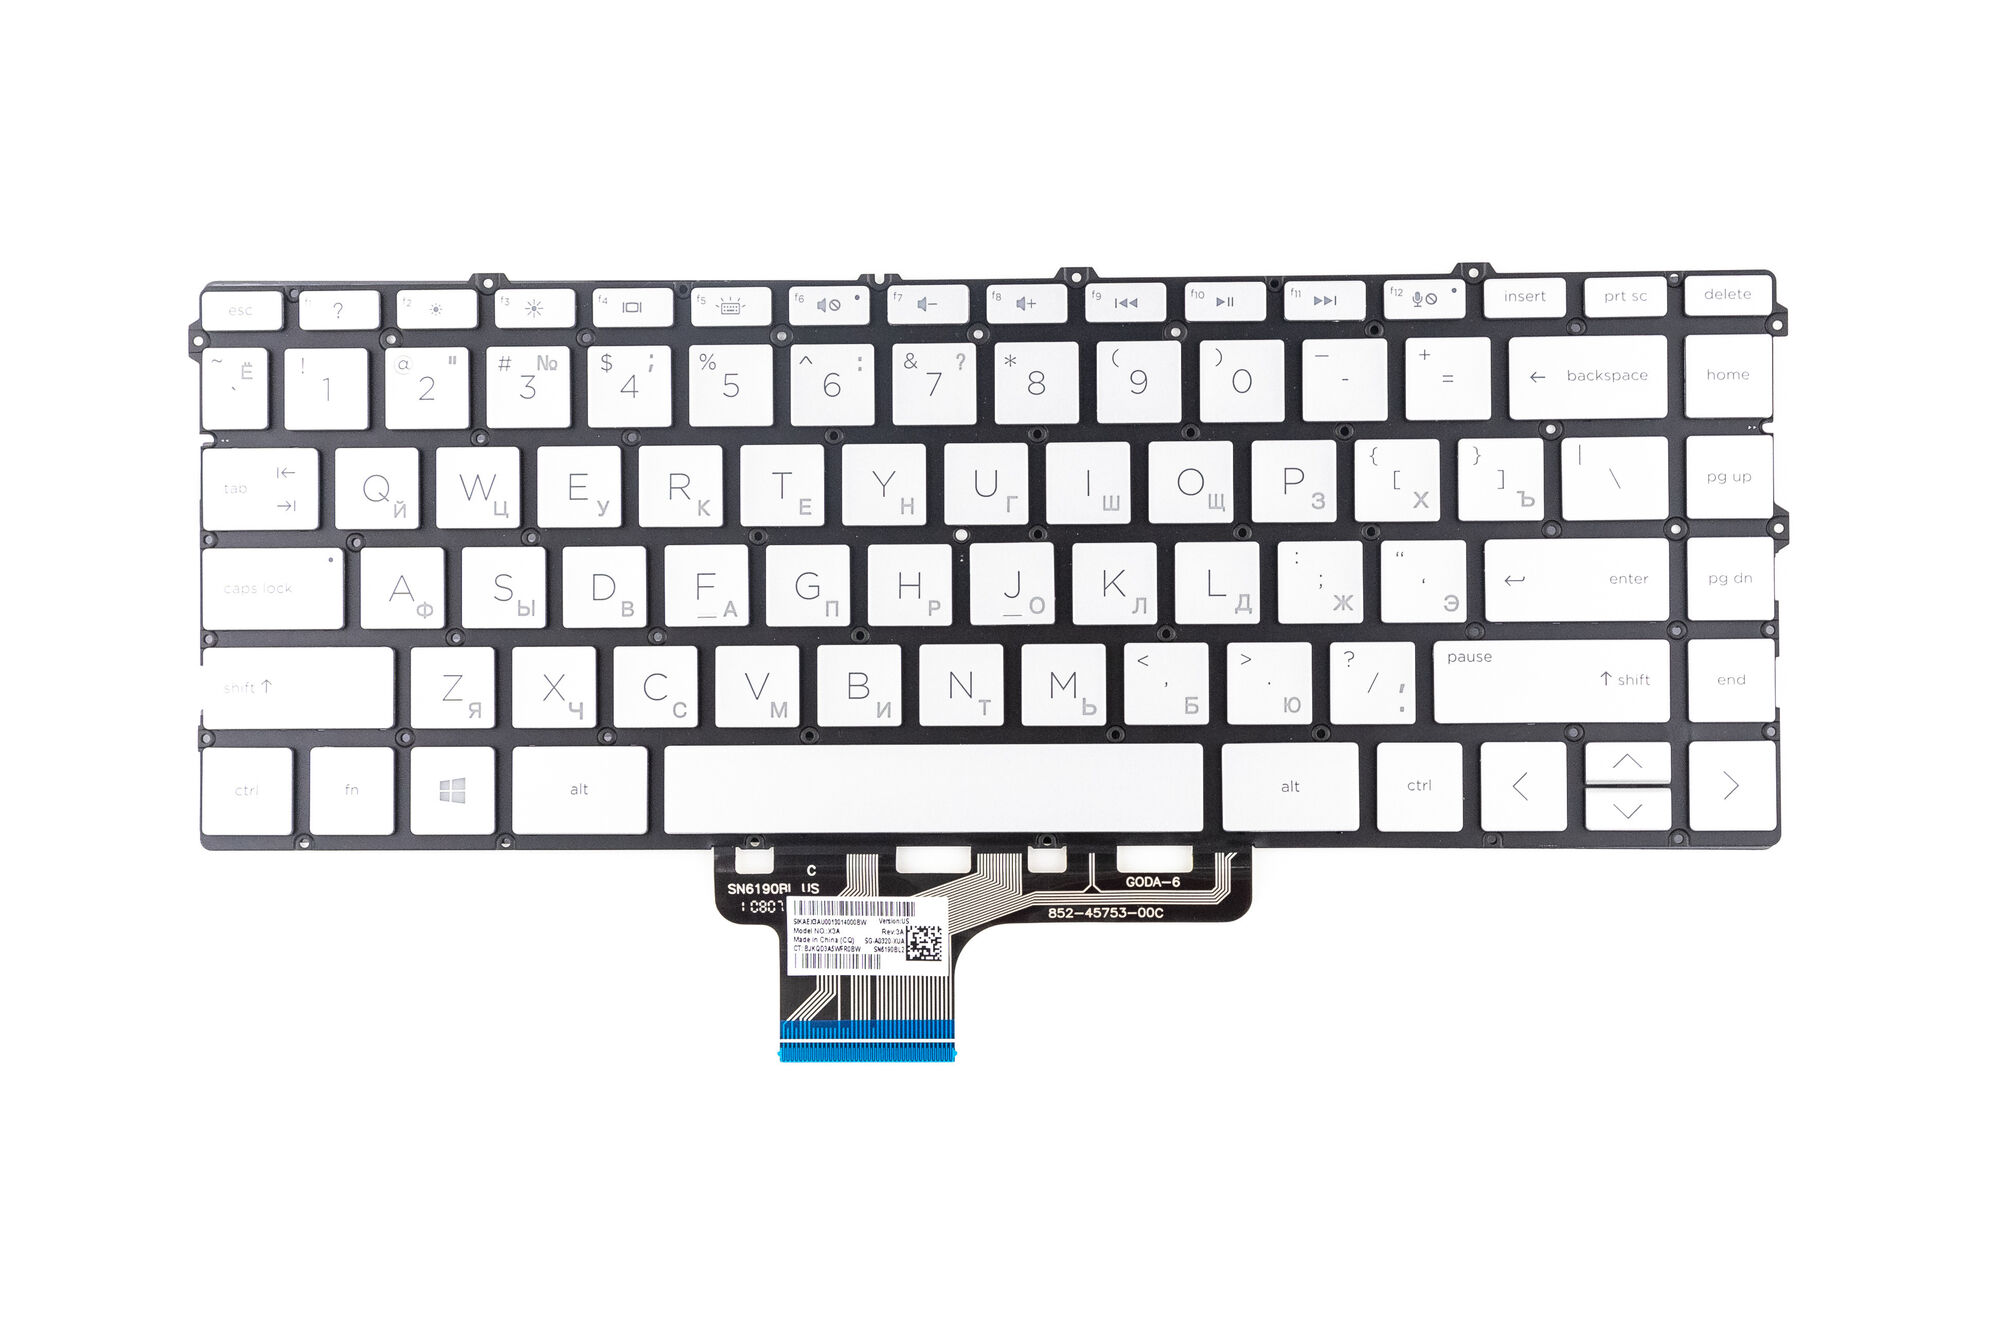 Клавиатура для HP 13-aw Серебро с подсветкой p/n: SN6190BL2 SG-A0320-XUA